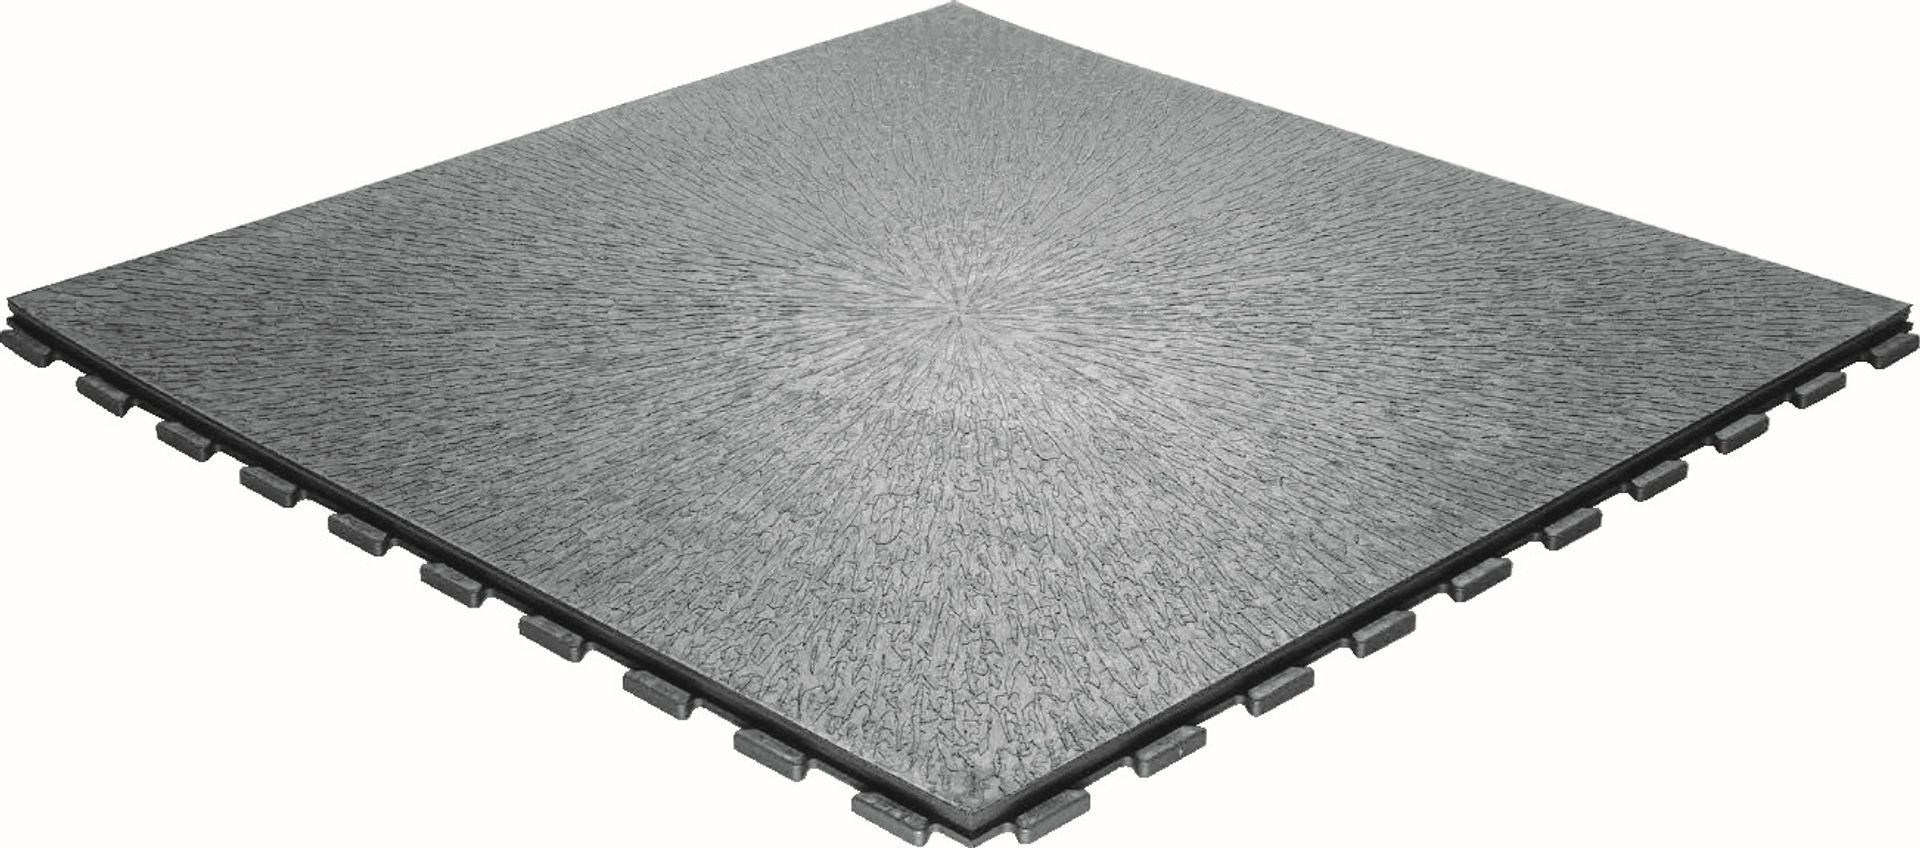 PVC-Industrieboden KLICK Fliese grau (7045) Strukturiert 464 mm x 464 mm - 15 mm Dicke